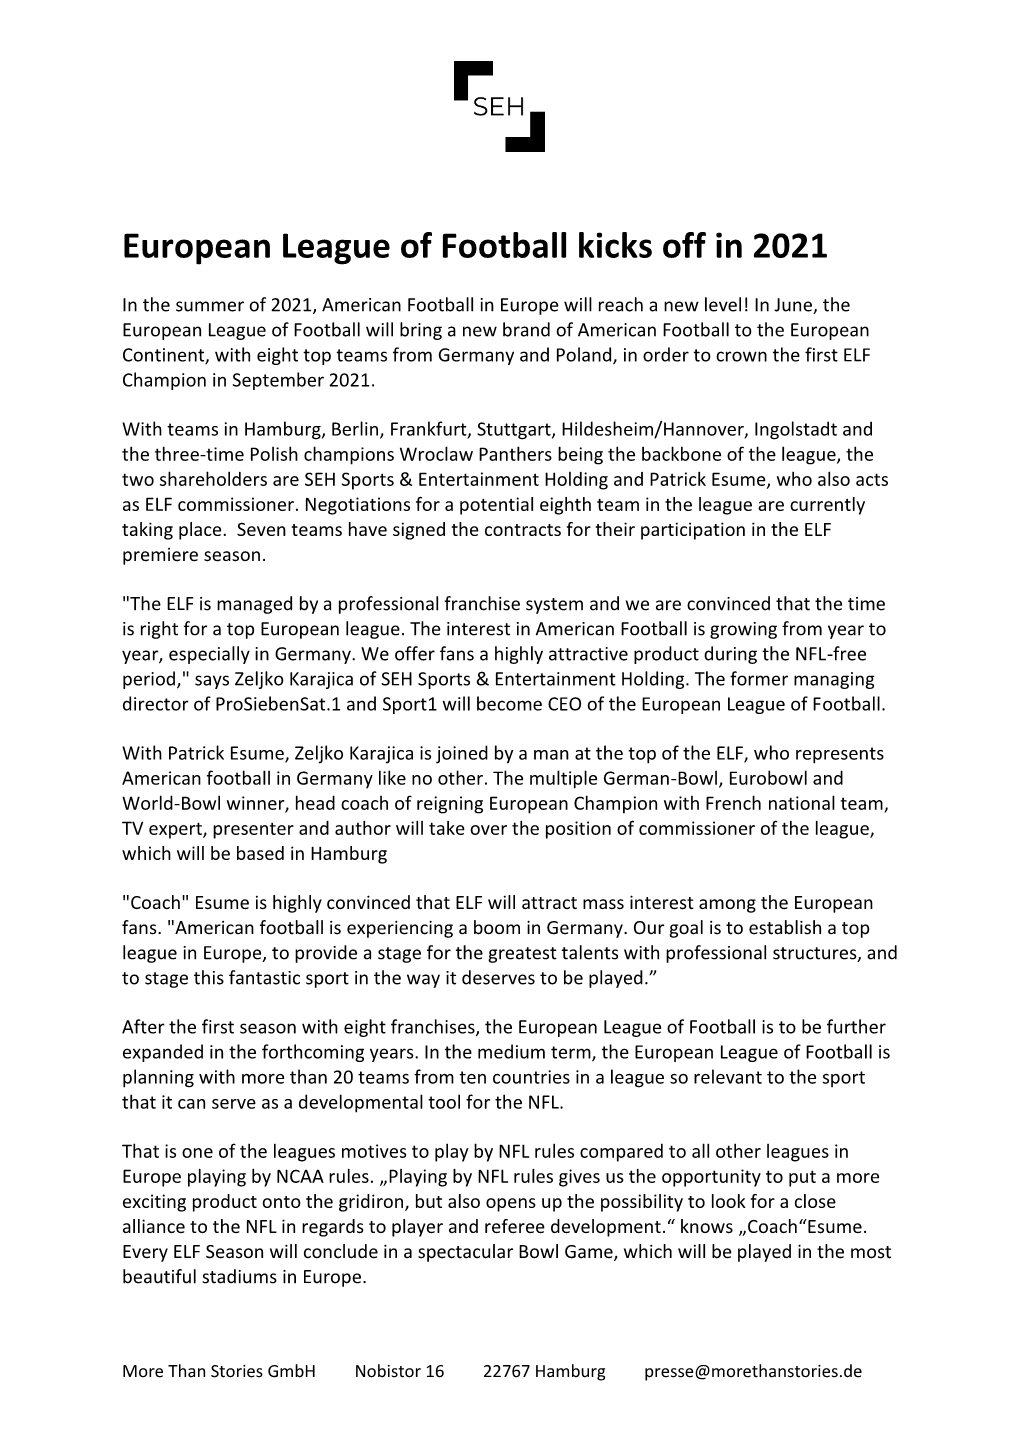 European League of Football Kicks Off in 2021